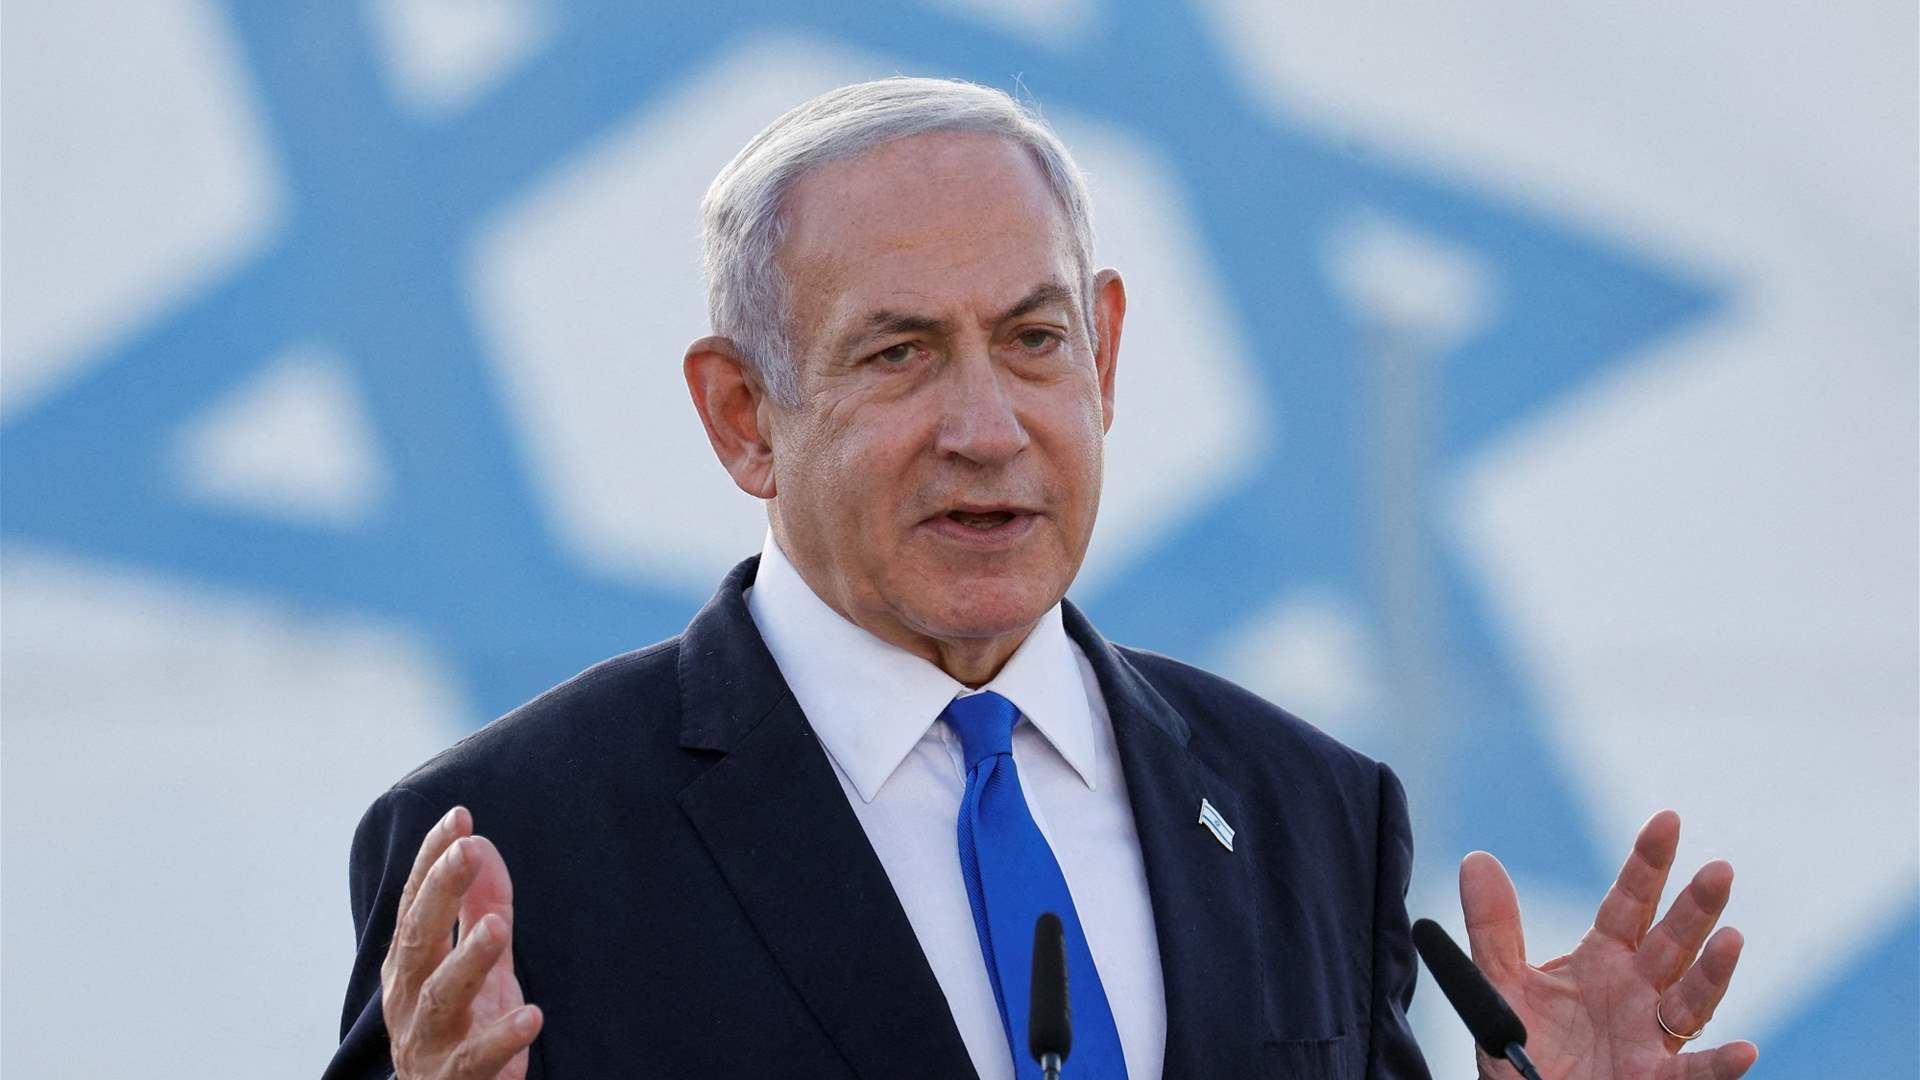 Israeli PM Netanyahu hesitates on Hamas deal, delays approval before US visit